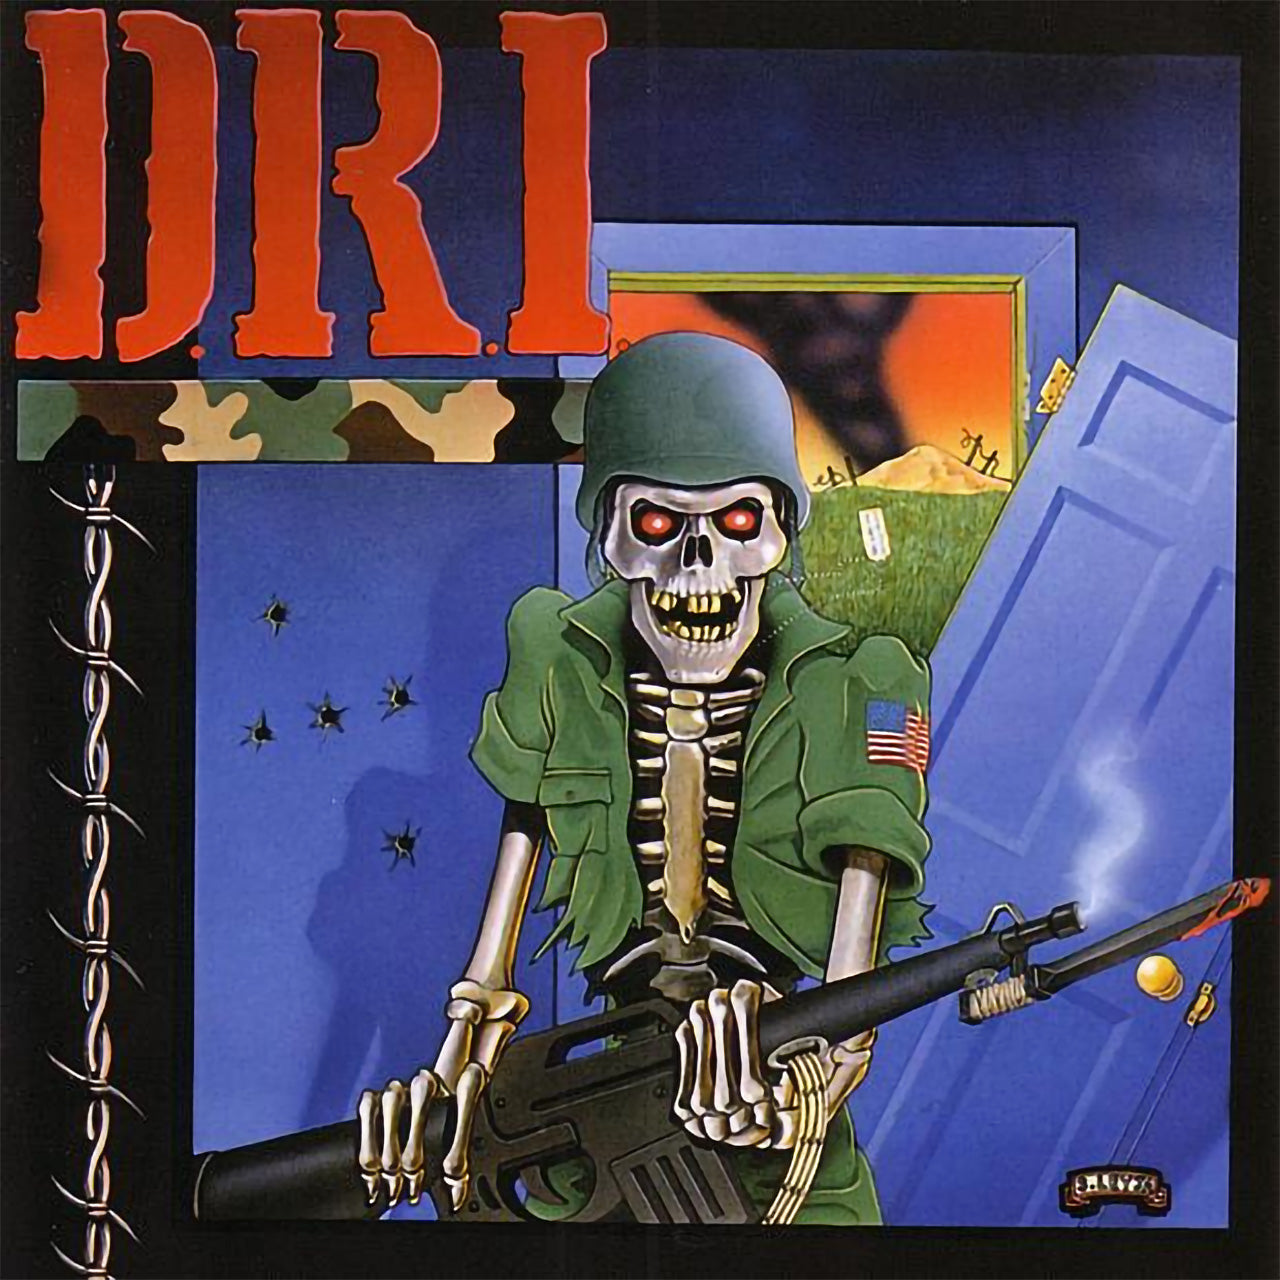 D.R.I. - The Dirty Rotten CD (Millennium Edition) (CD)